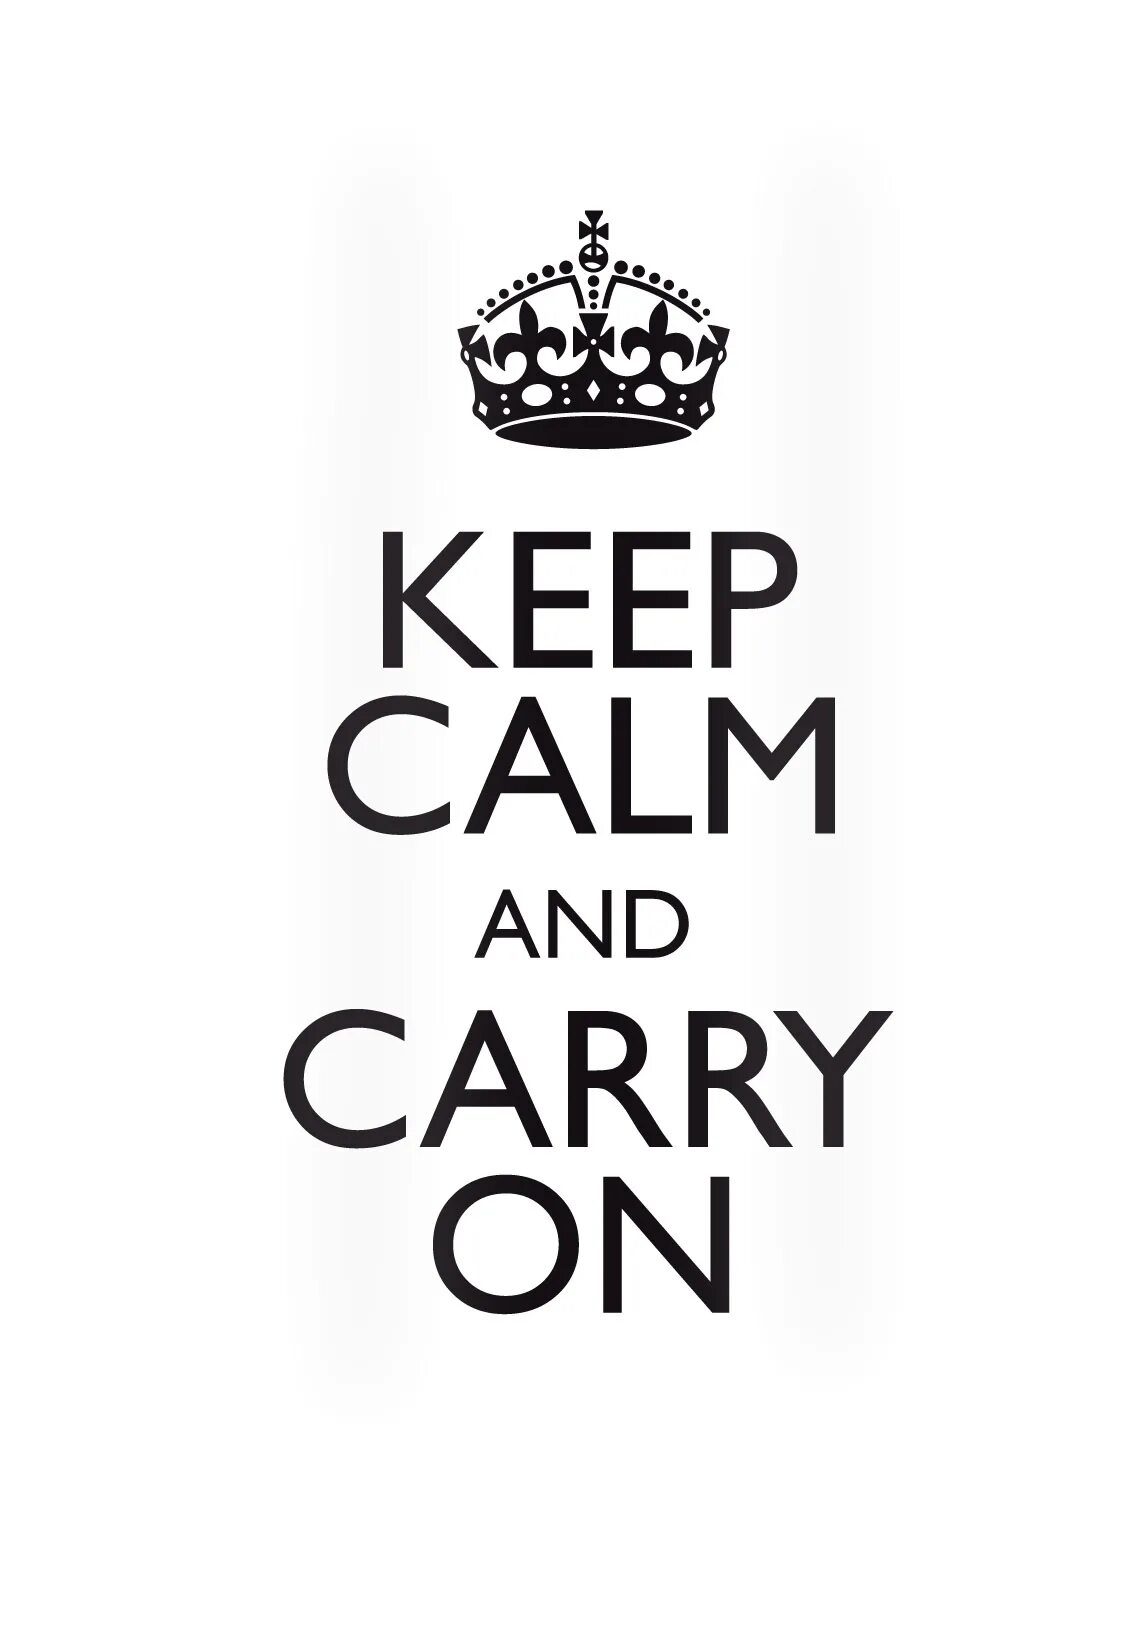 Keep calm на русский. Keep Calm and carry. Keep Calm and carry on. Keep Calm and carry on плакат. Keep Calm перевод на русский.